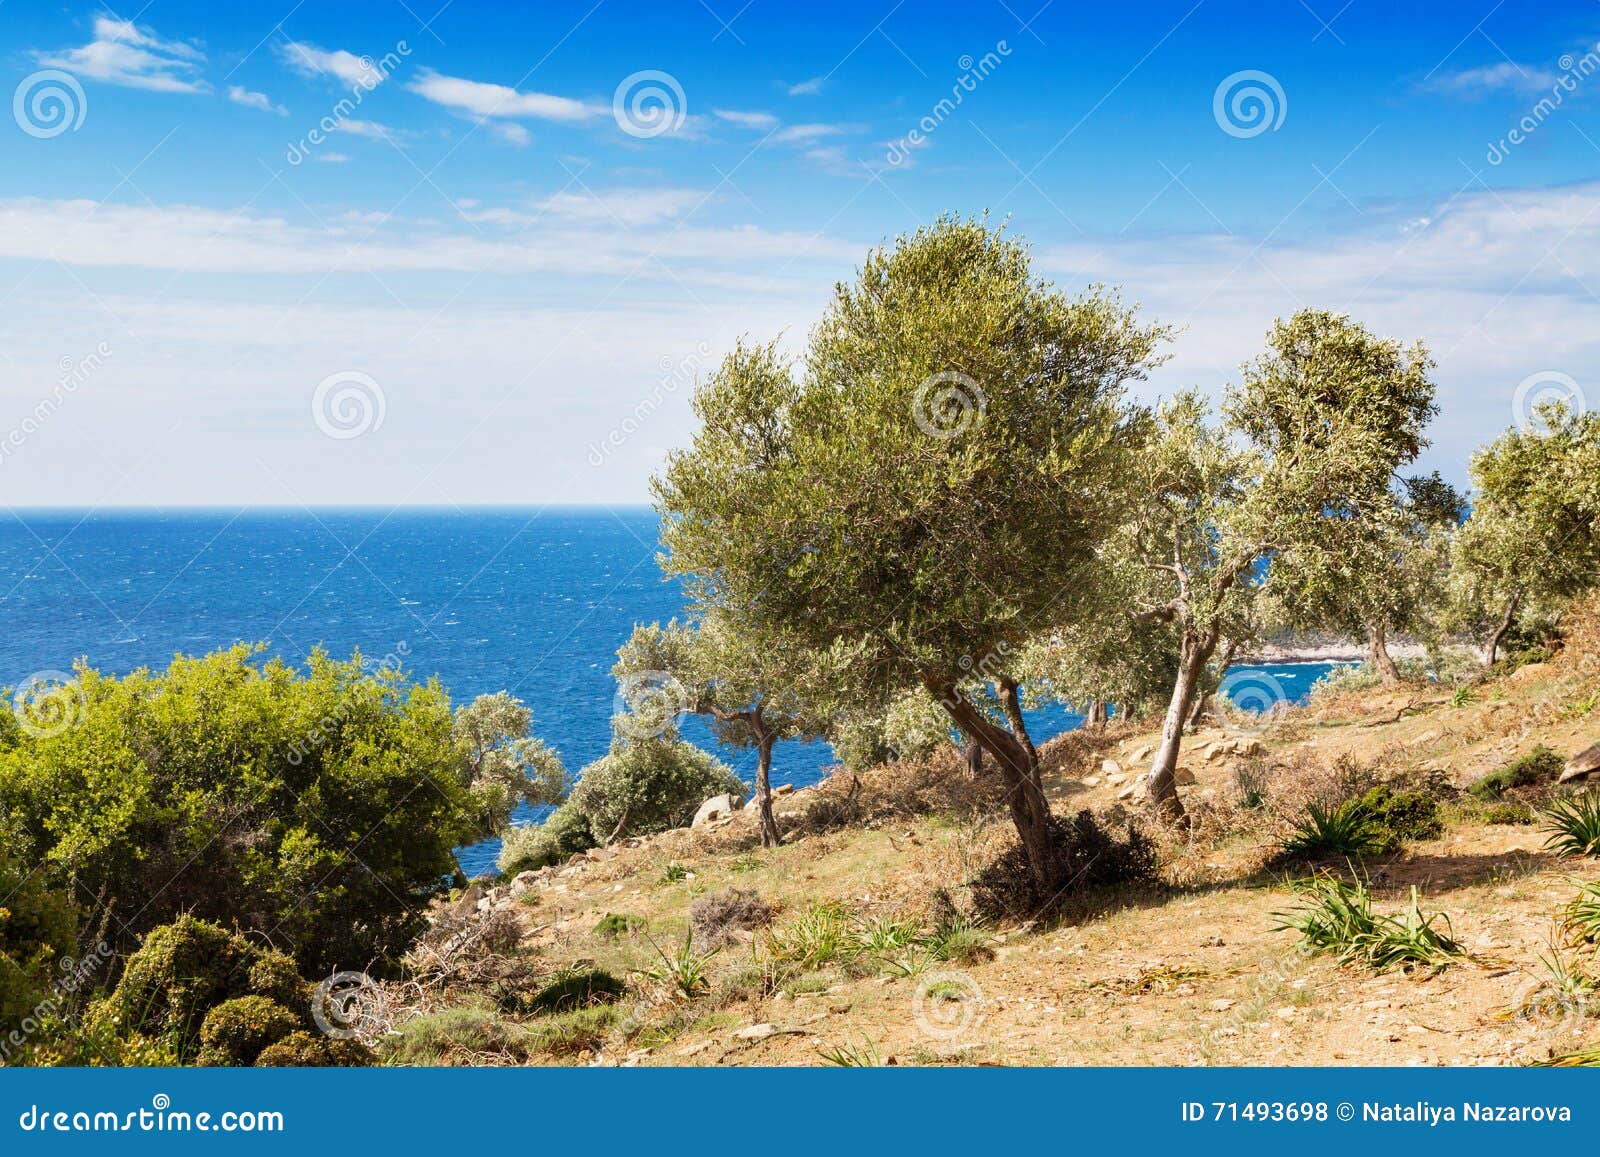 Assos village Mediterranean Sea, Greece. Summer vacation on Greek Island.  by Igor Tichonow. Photo stock - StudioNow